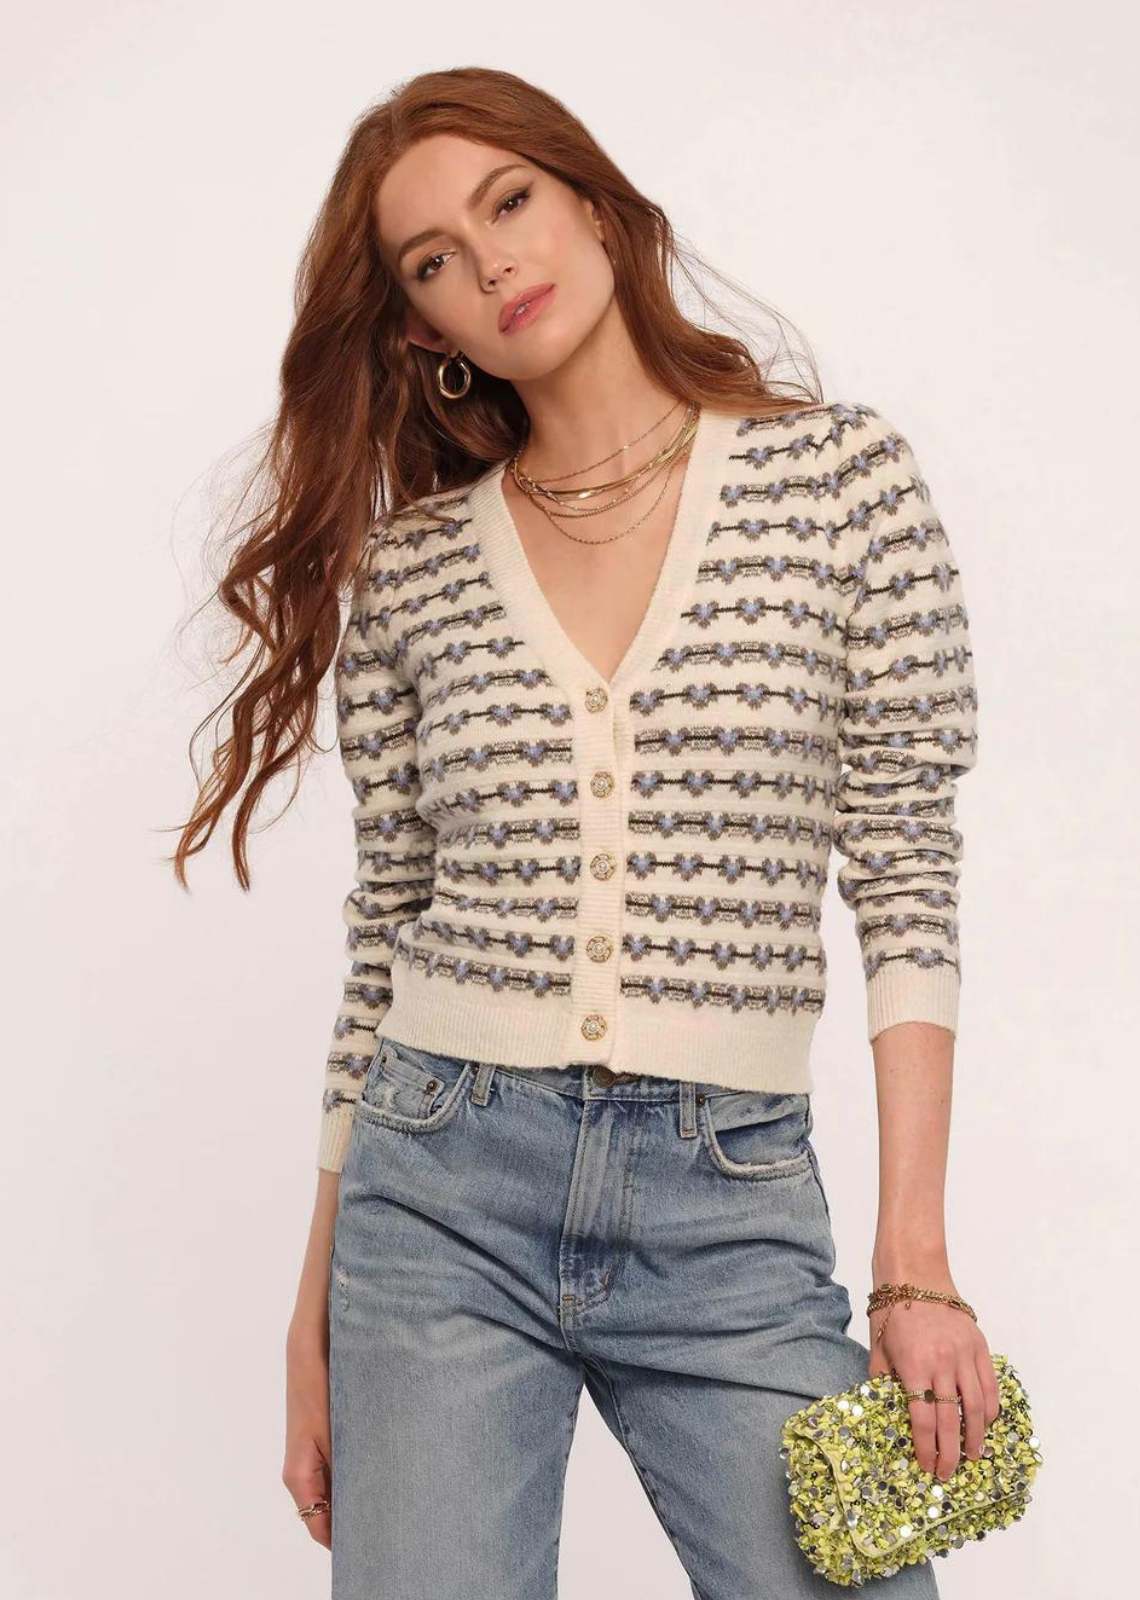 Bri Pointelle Knit Sweater in Ivory by Heartloom